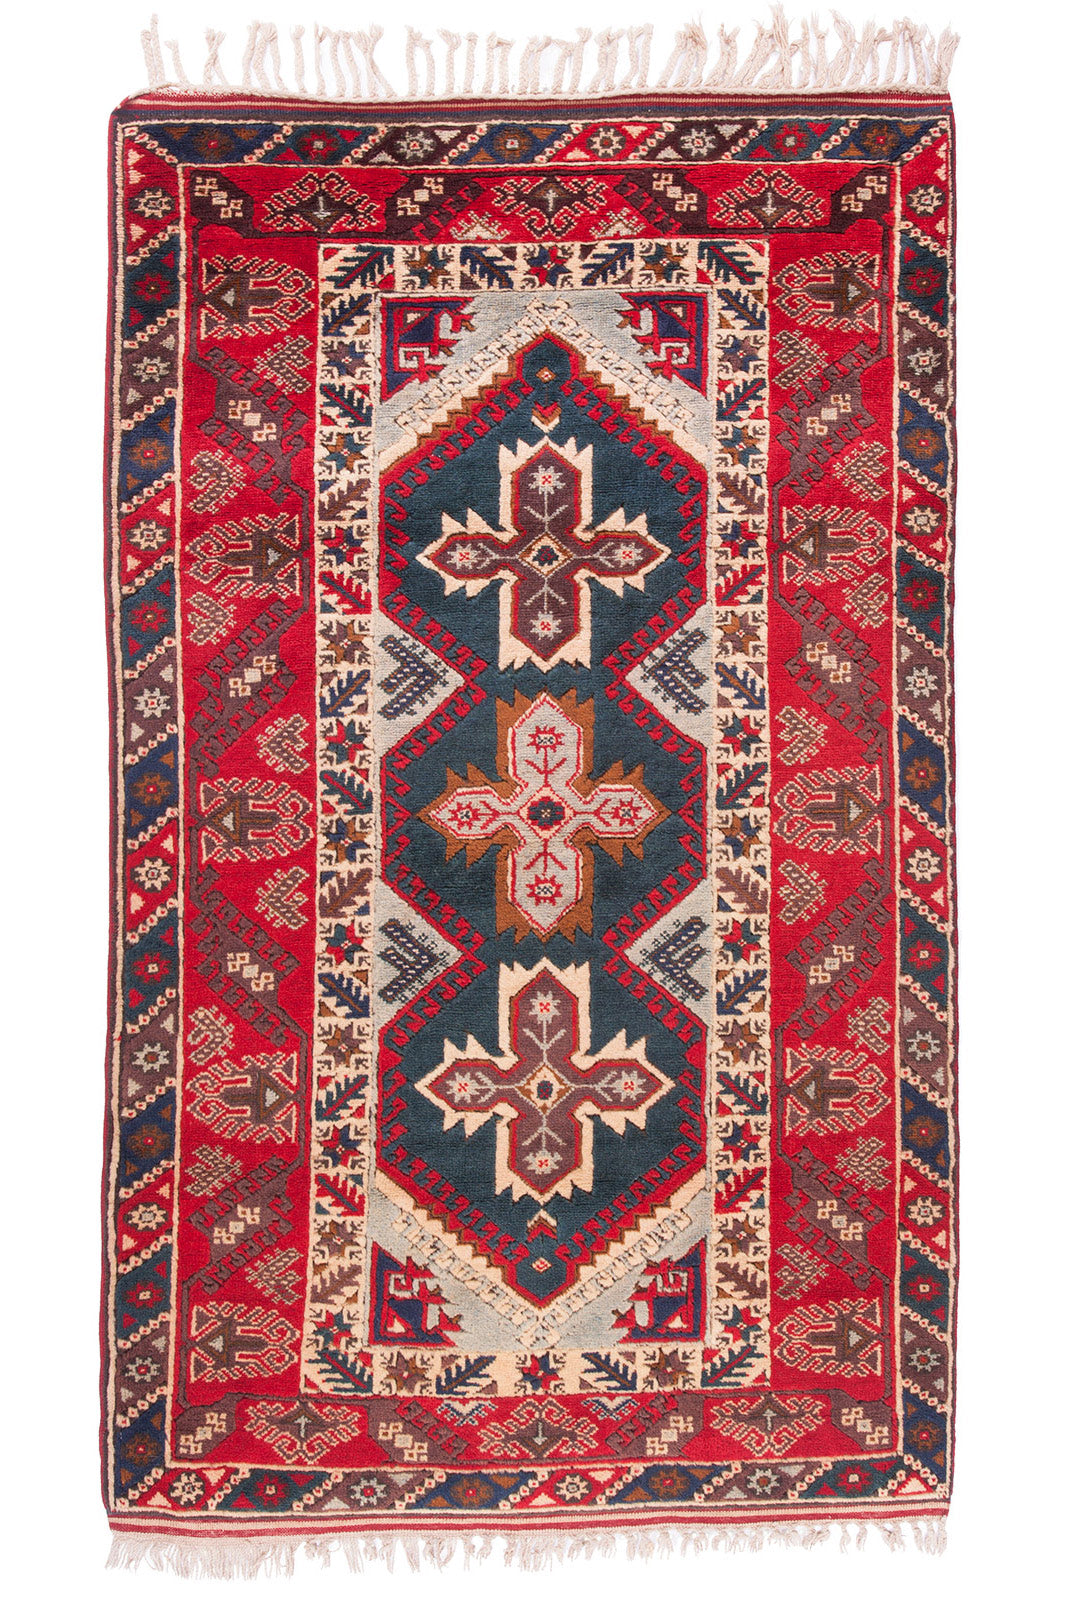 Orient Handmade Carpets